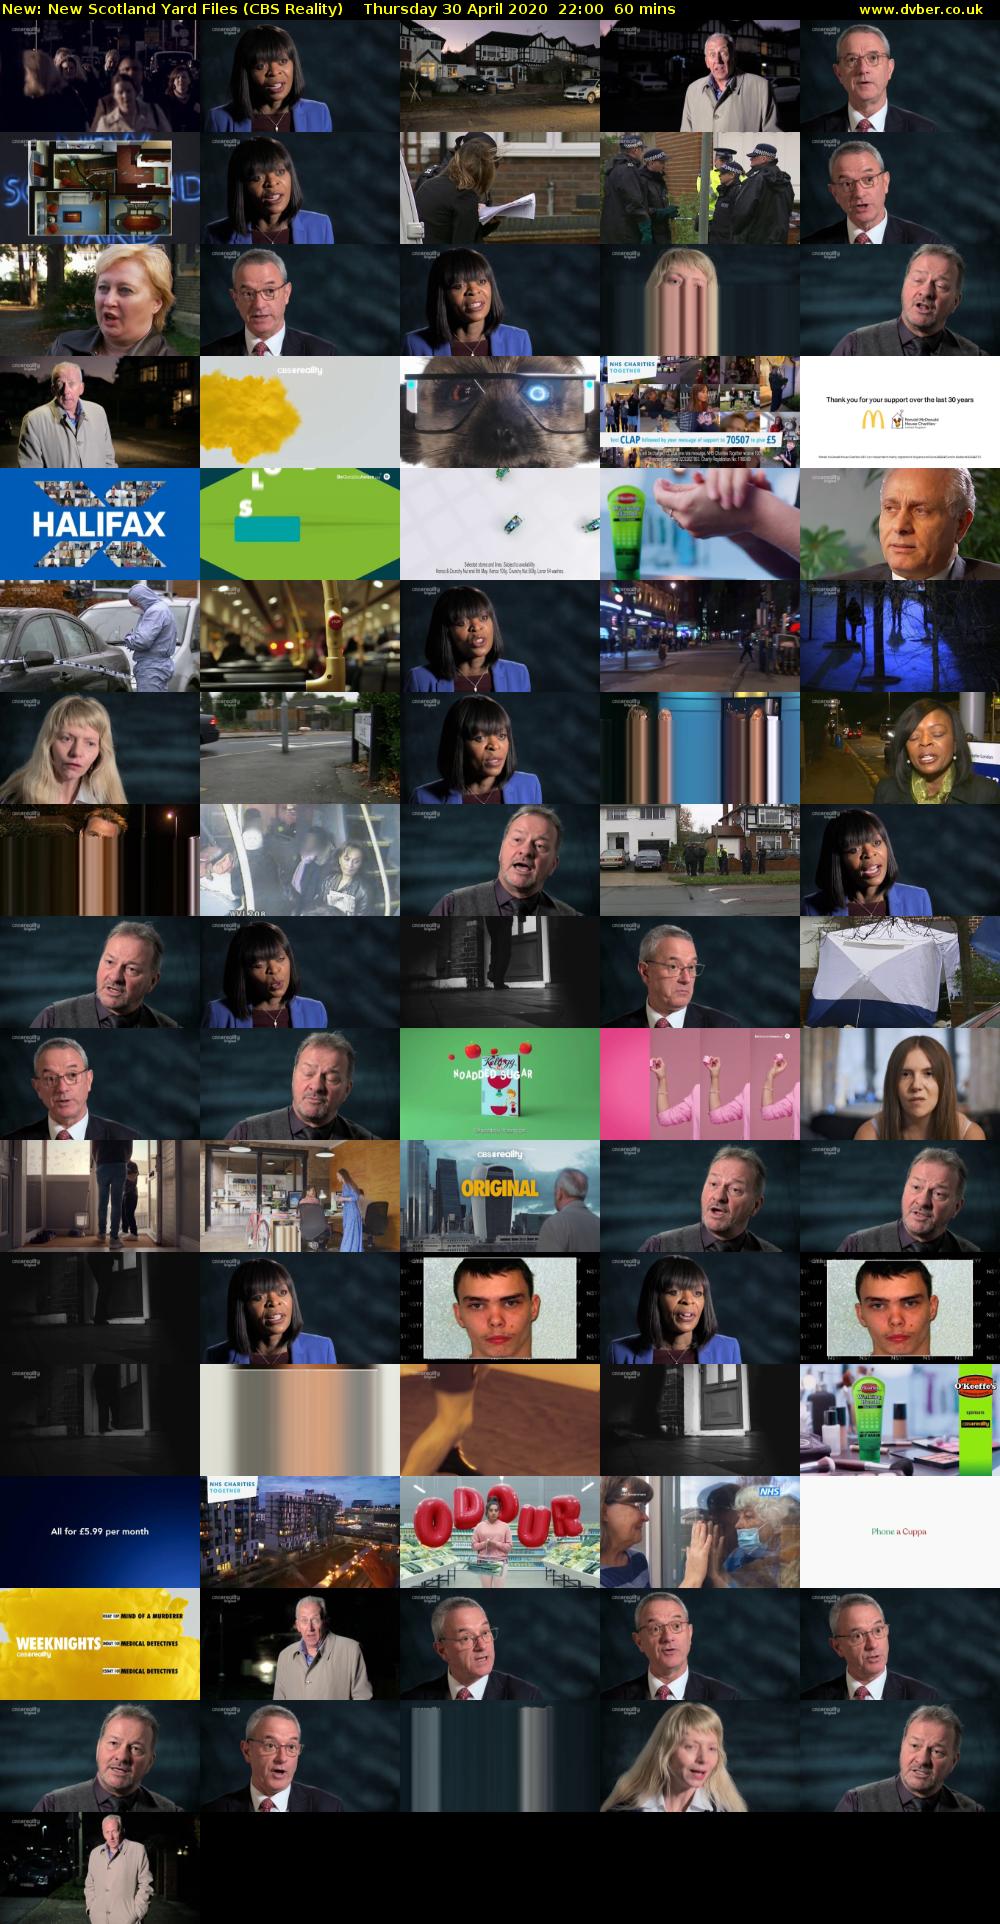 New Scotland Yard Files (CBS Reality) Thursday 30 April 2020 22:00 - 23:00